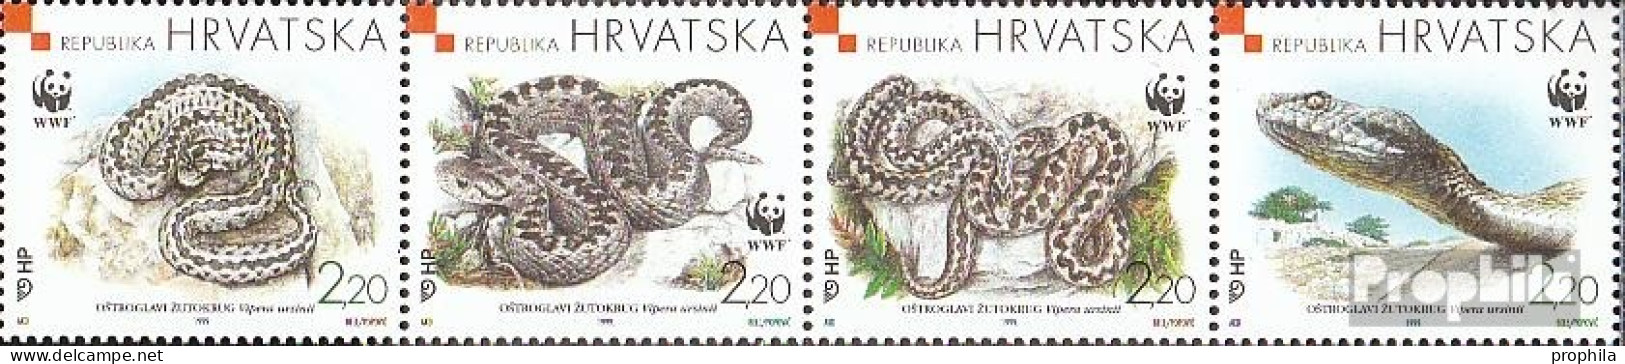 Kroatien 500-503 Viererstreifen (kompl.Ausg.) Postfrisch 1999 Naturschutz Wiesenotter - Kroatien